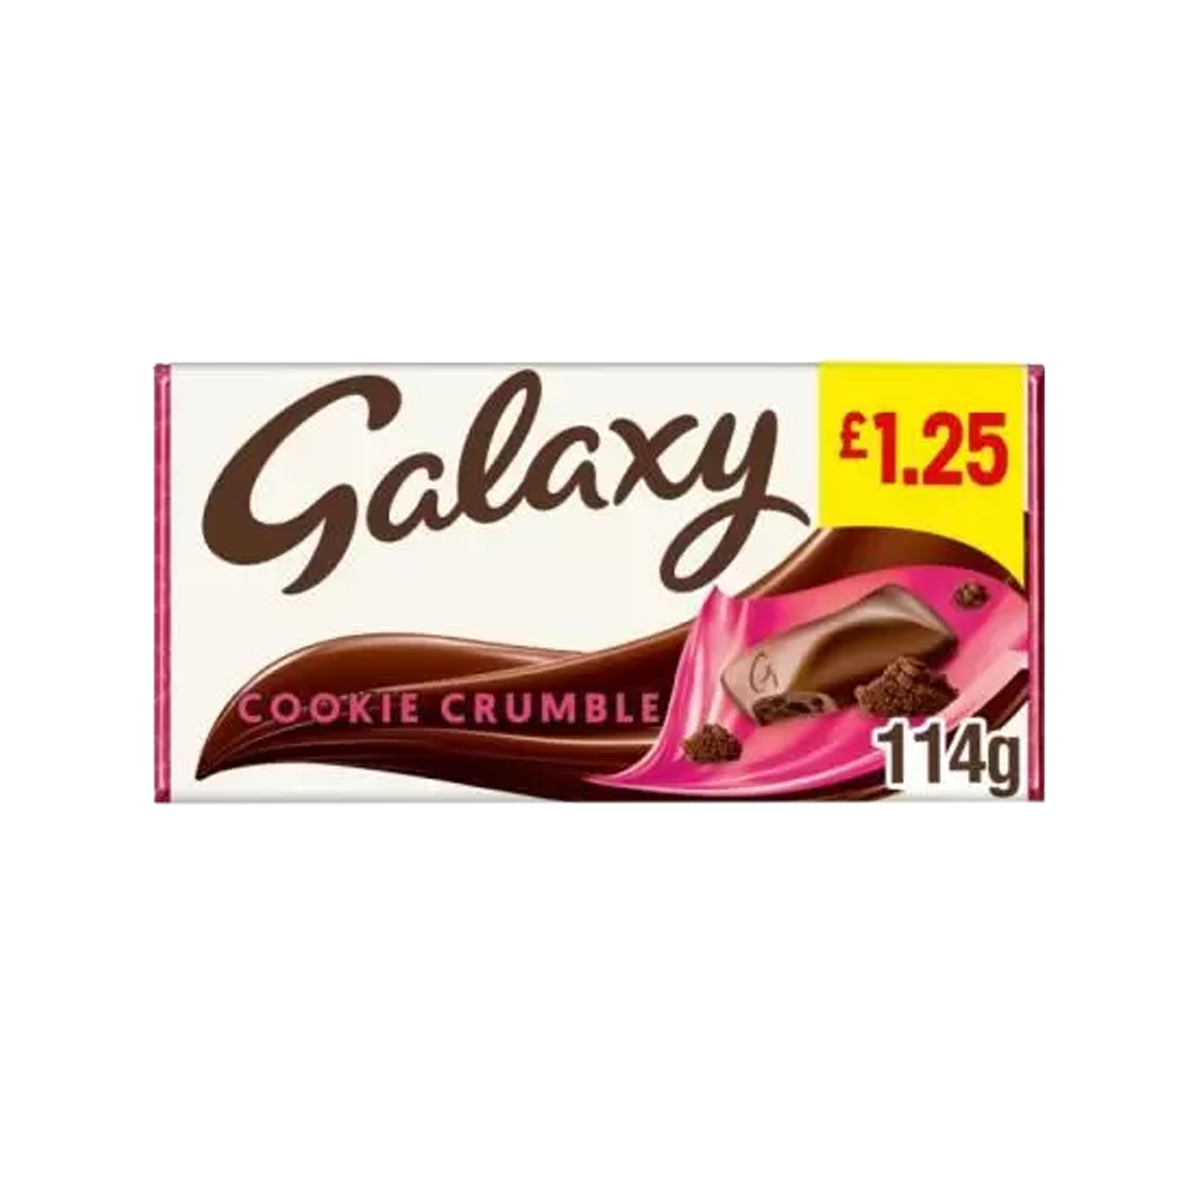 Galaxy Cookie Crumble Milk Chocolate Block Bar 114g